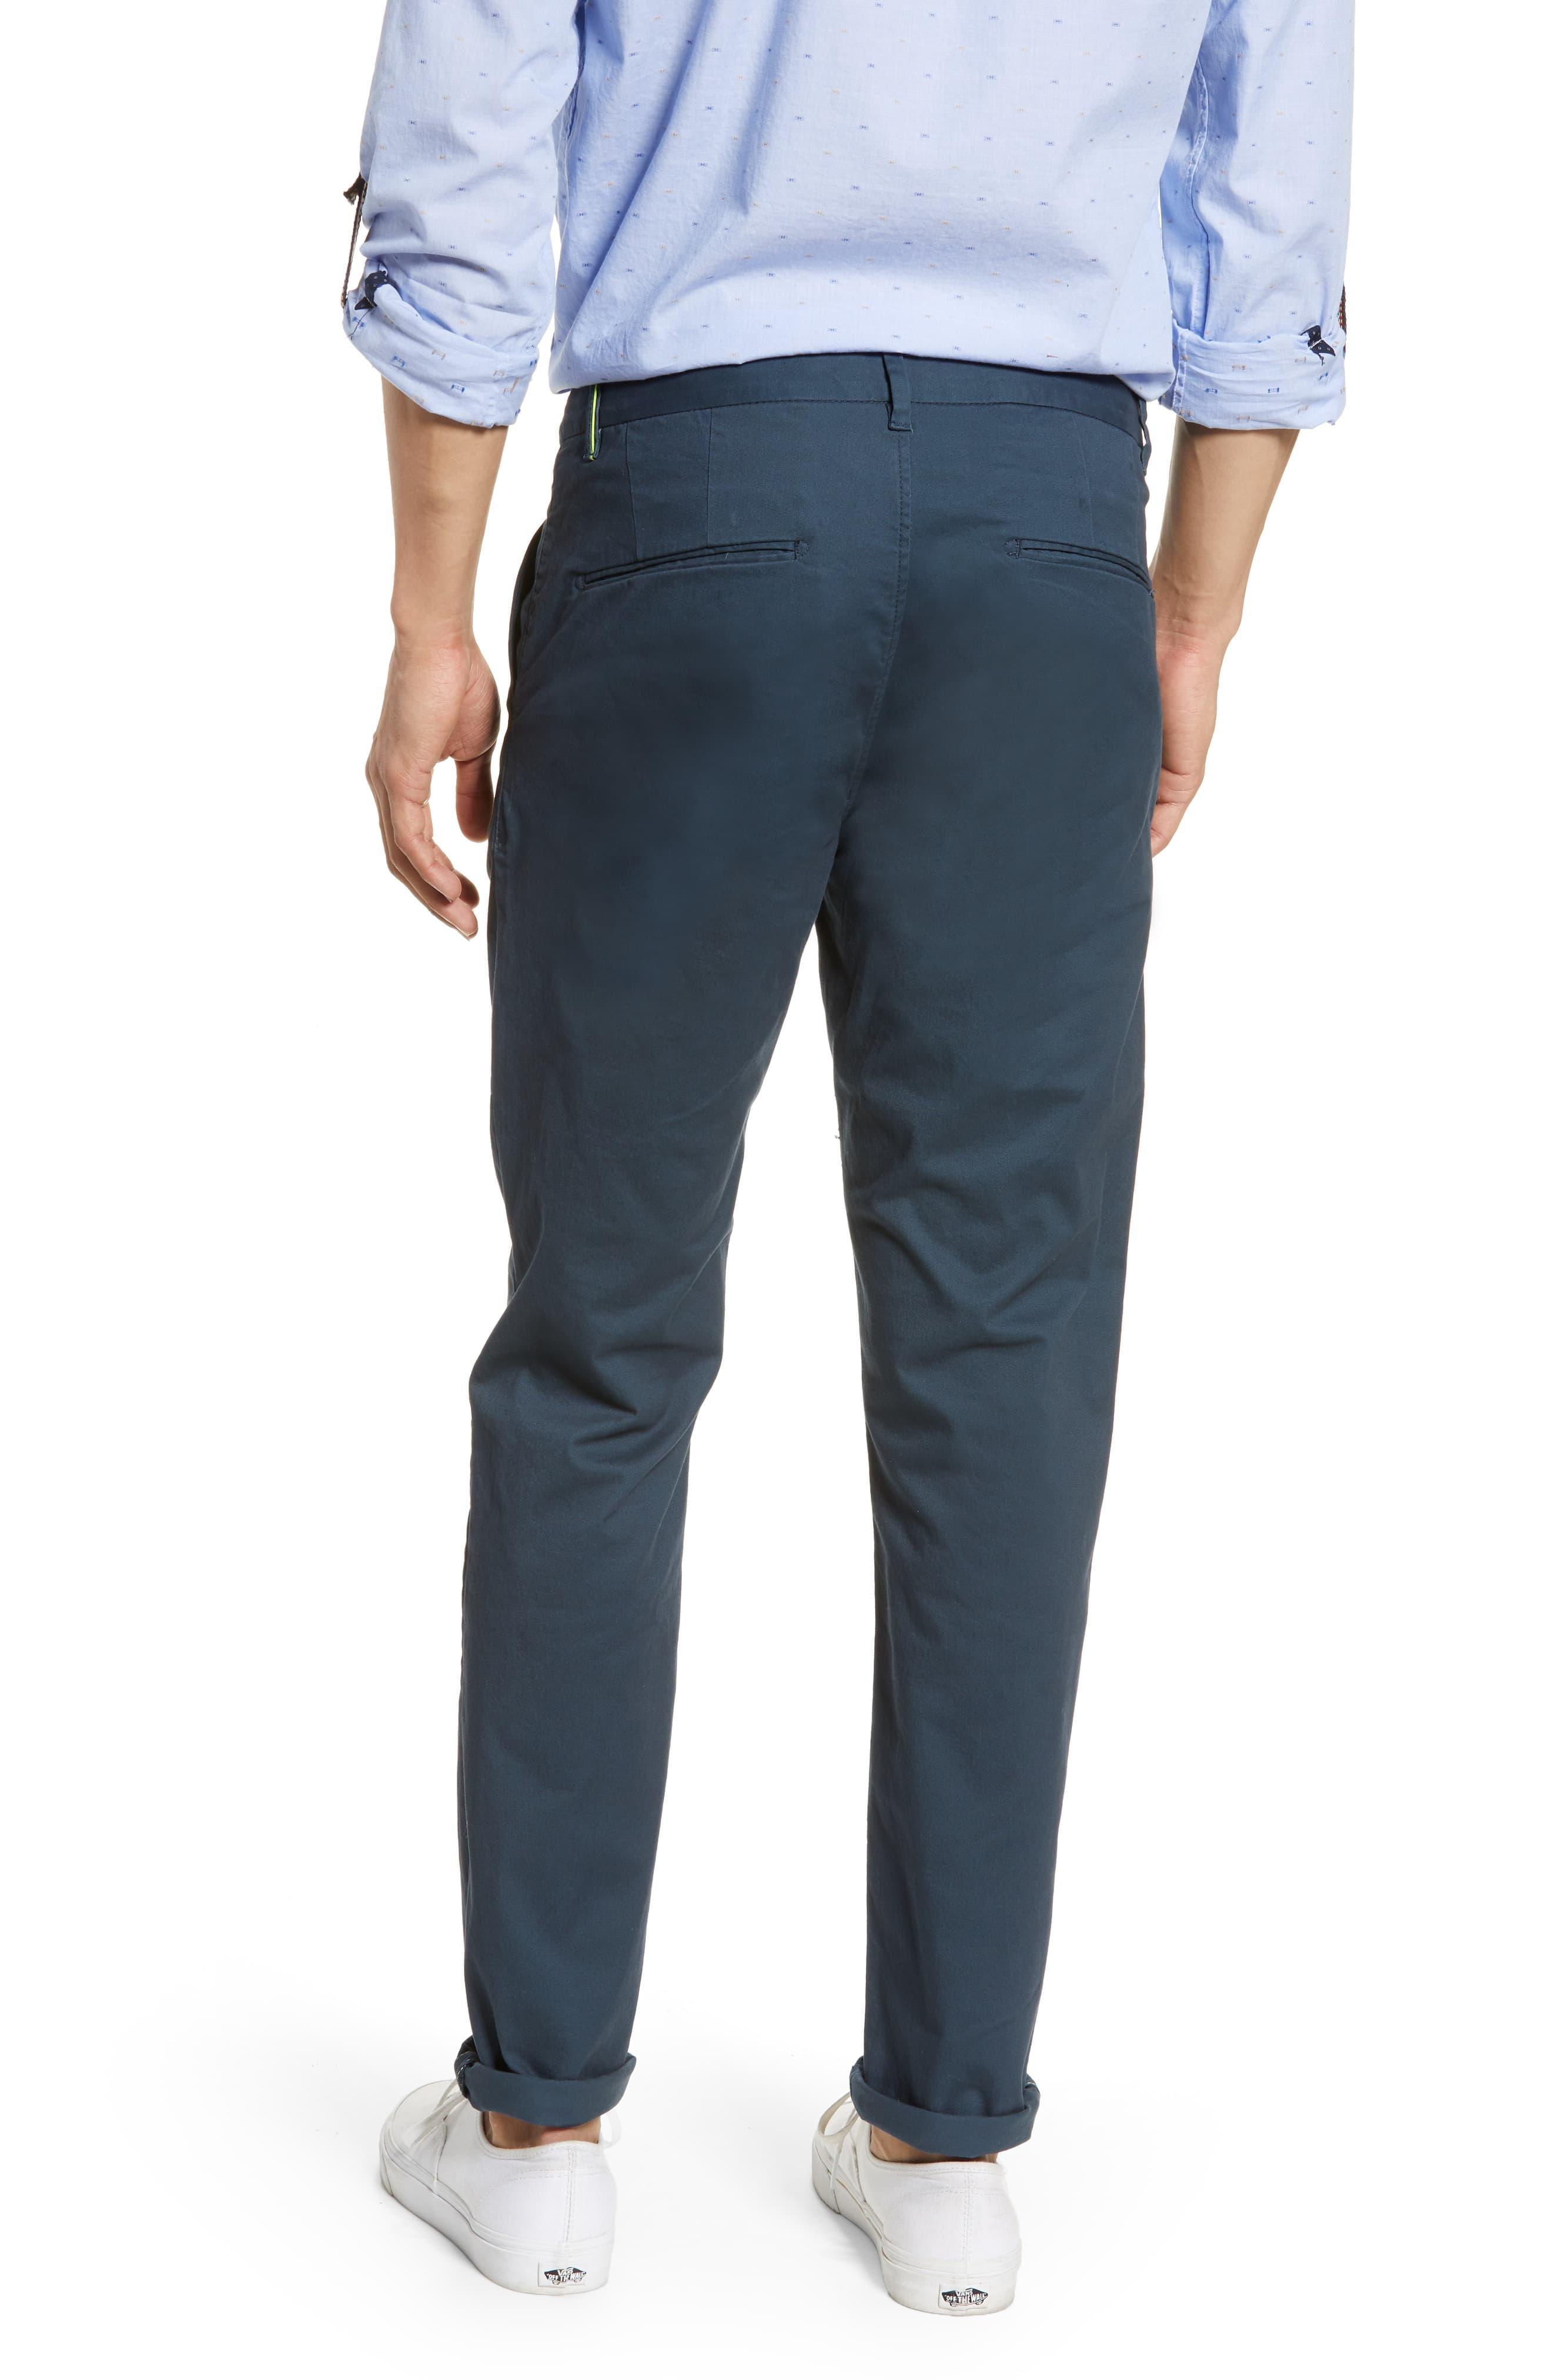 Scotch & Soda Mott Classic Fit Stretch Cotton Pants in Blue for Men - Lyst